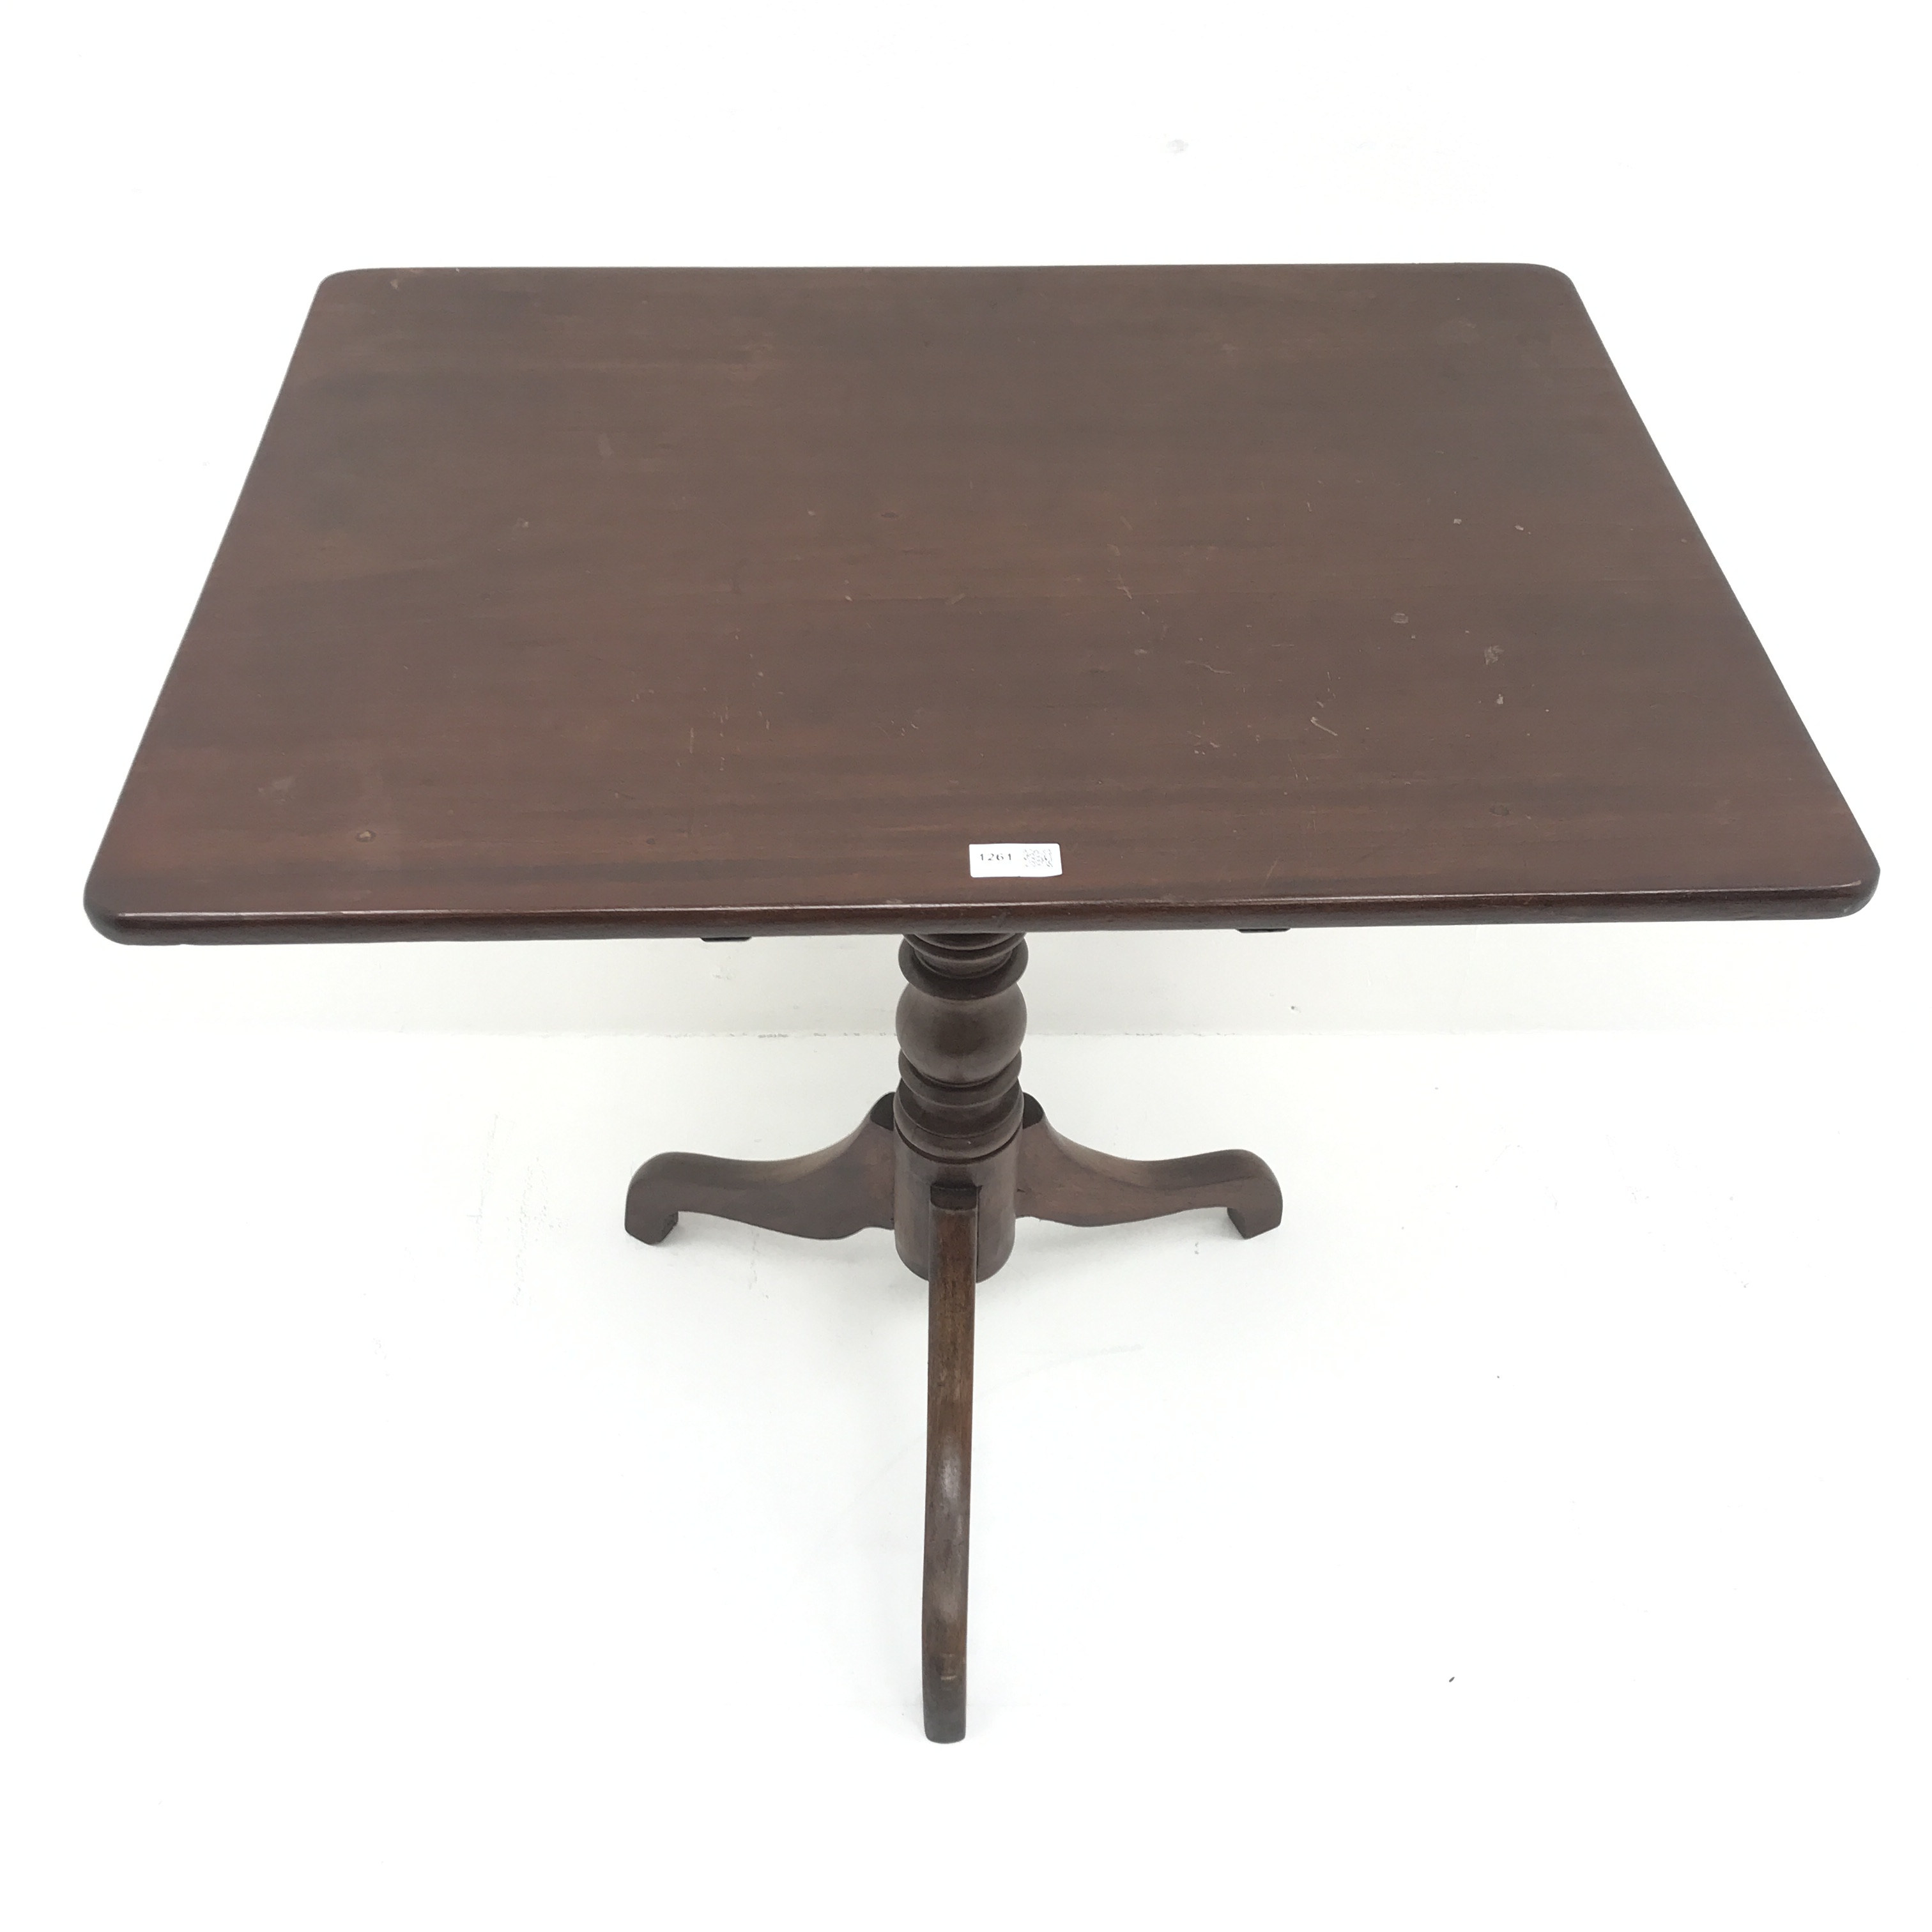 19th century mahogany tilt top table, single turned column on tripod base, W75cm, H71cm, D85cm - Image 5 of 6